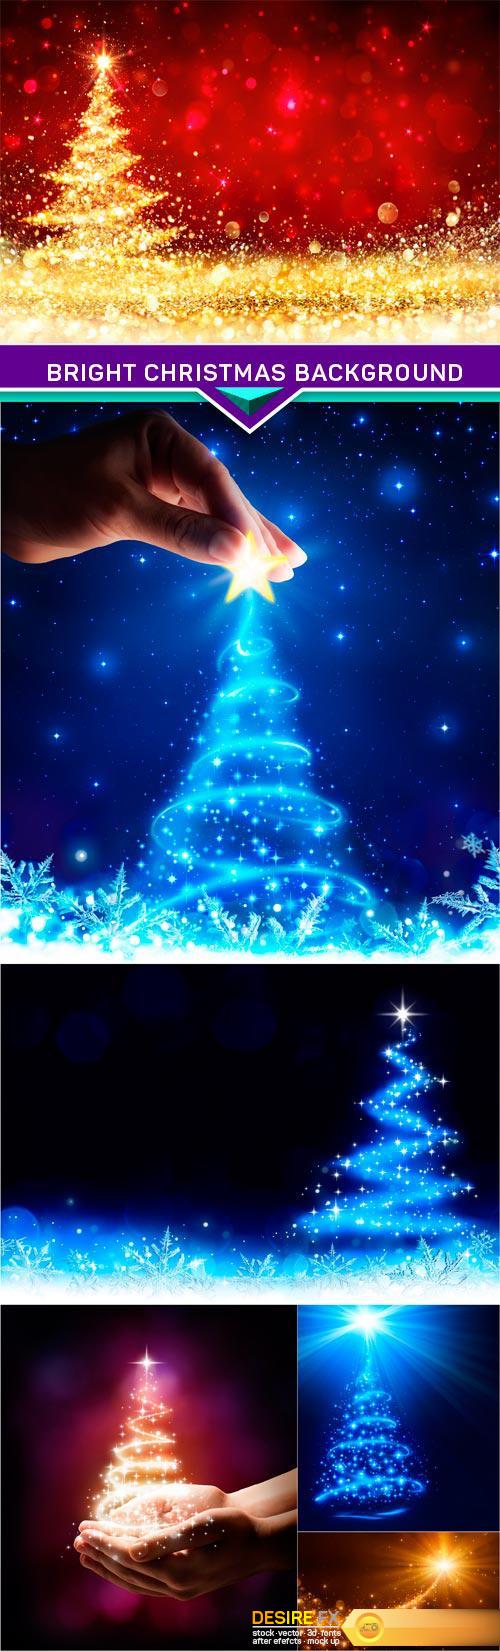 Bright Christmas Background 6X JPEG